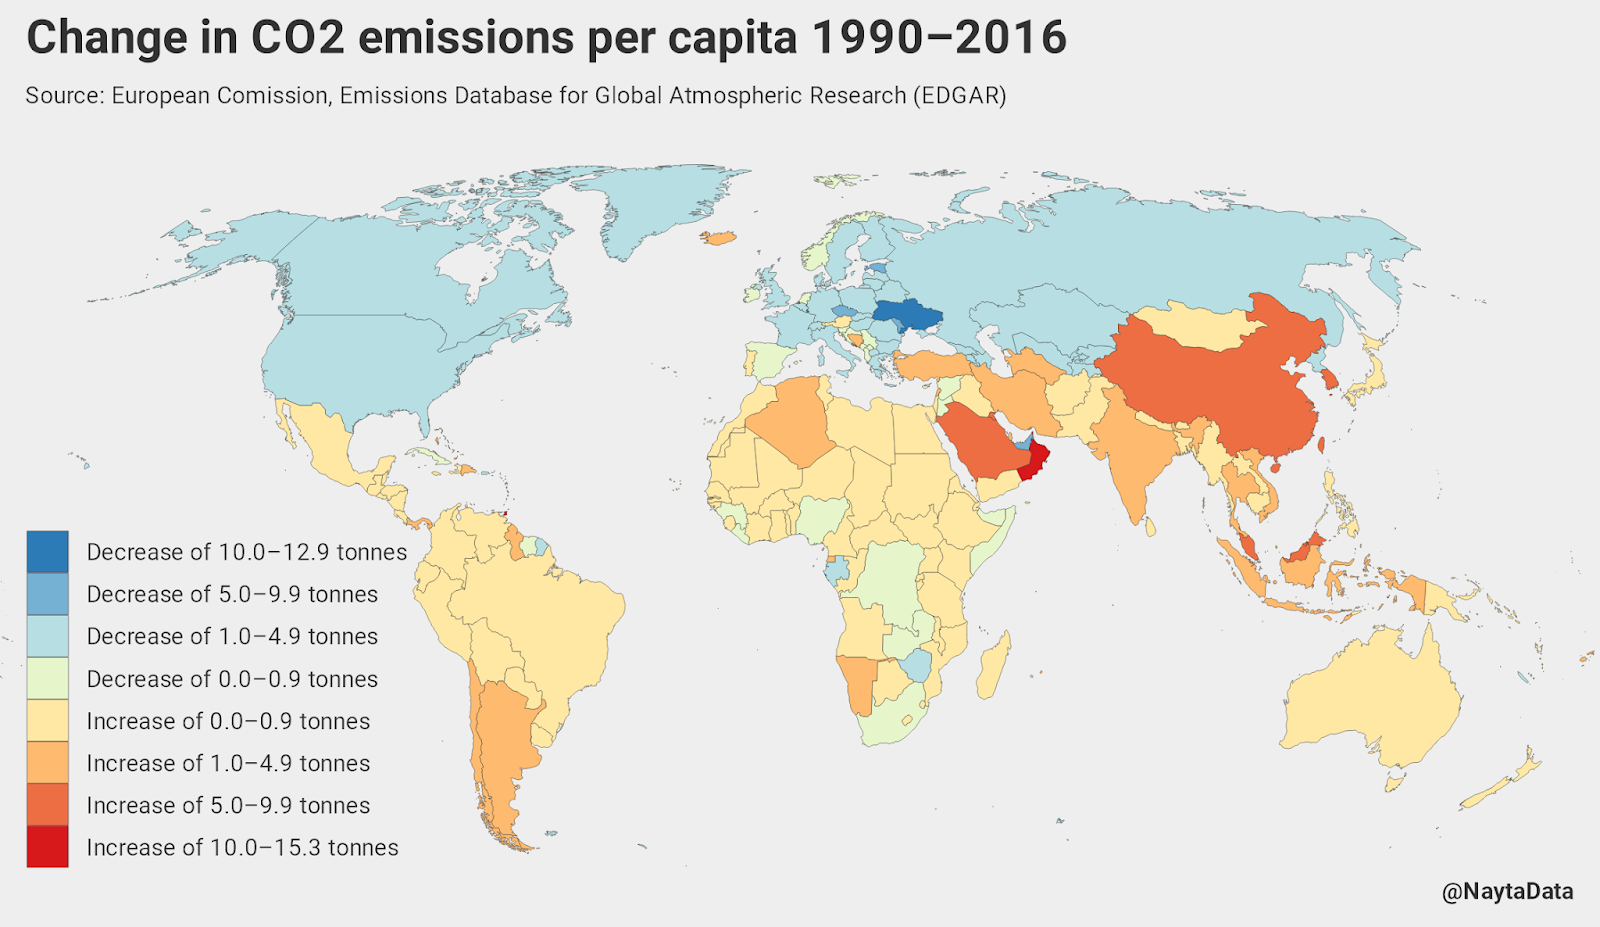 Change in CO2 emissions per capita (1990 - 2016)